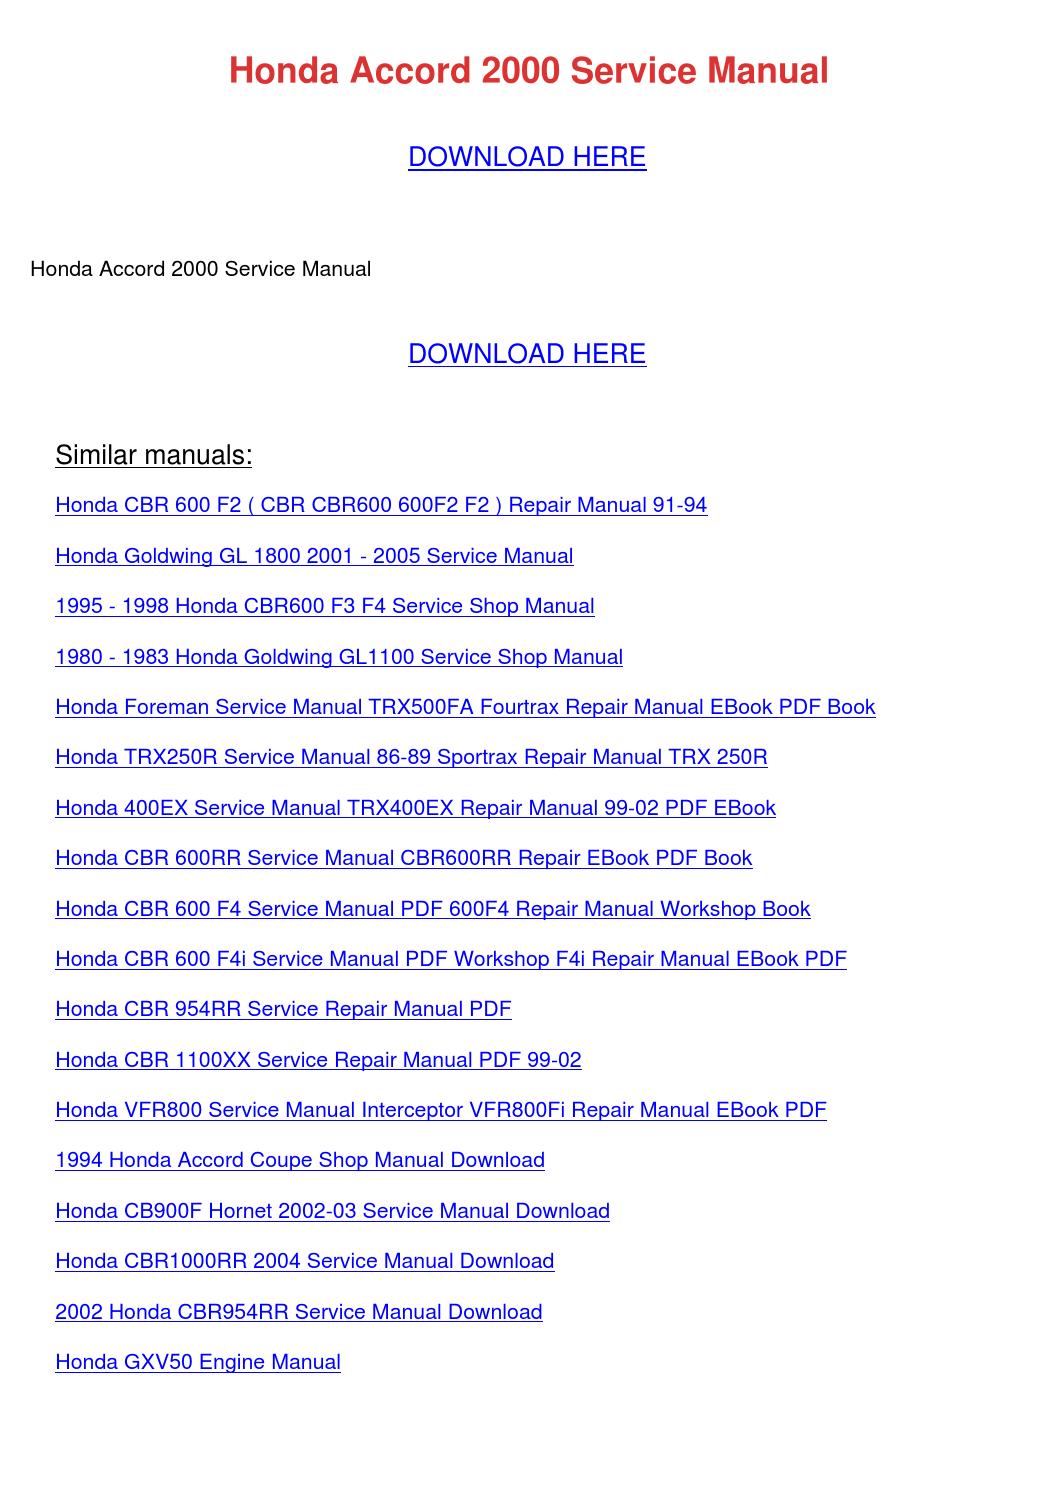 2000 Honda Accord Service Manual Download